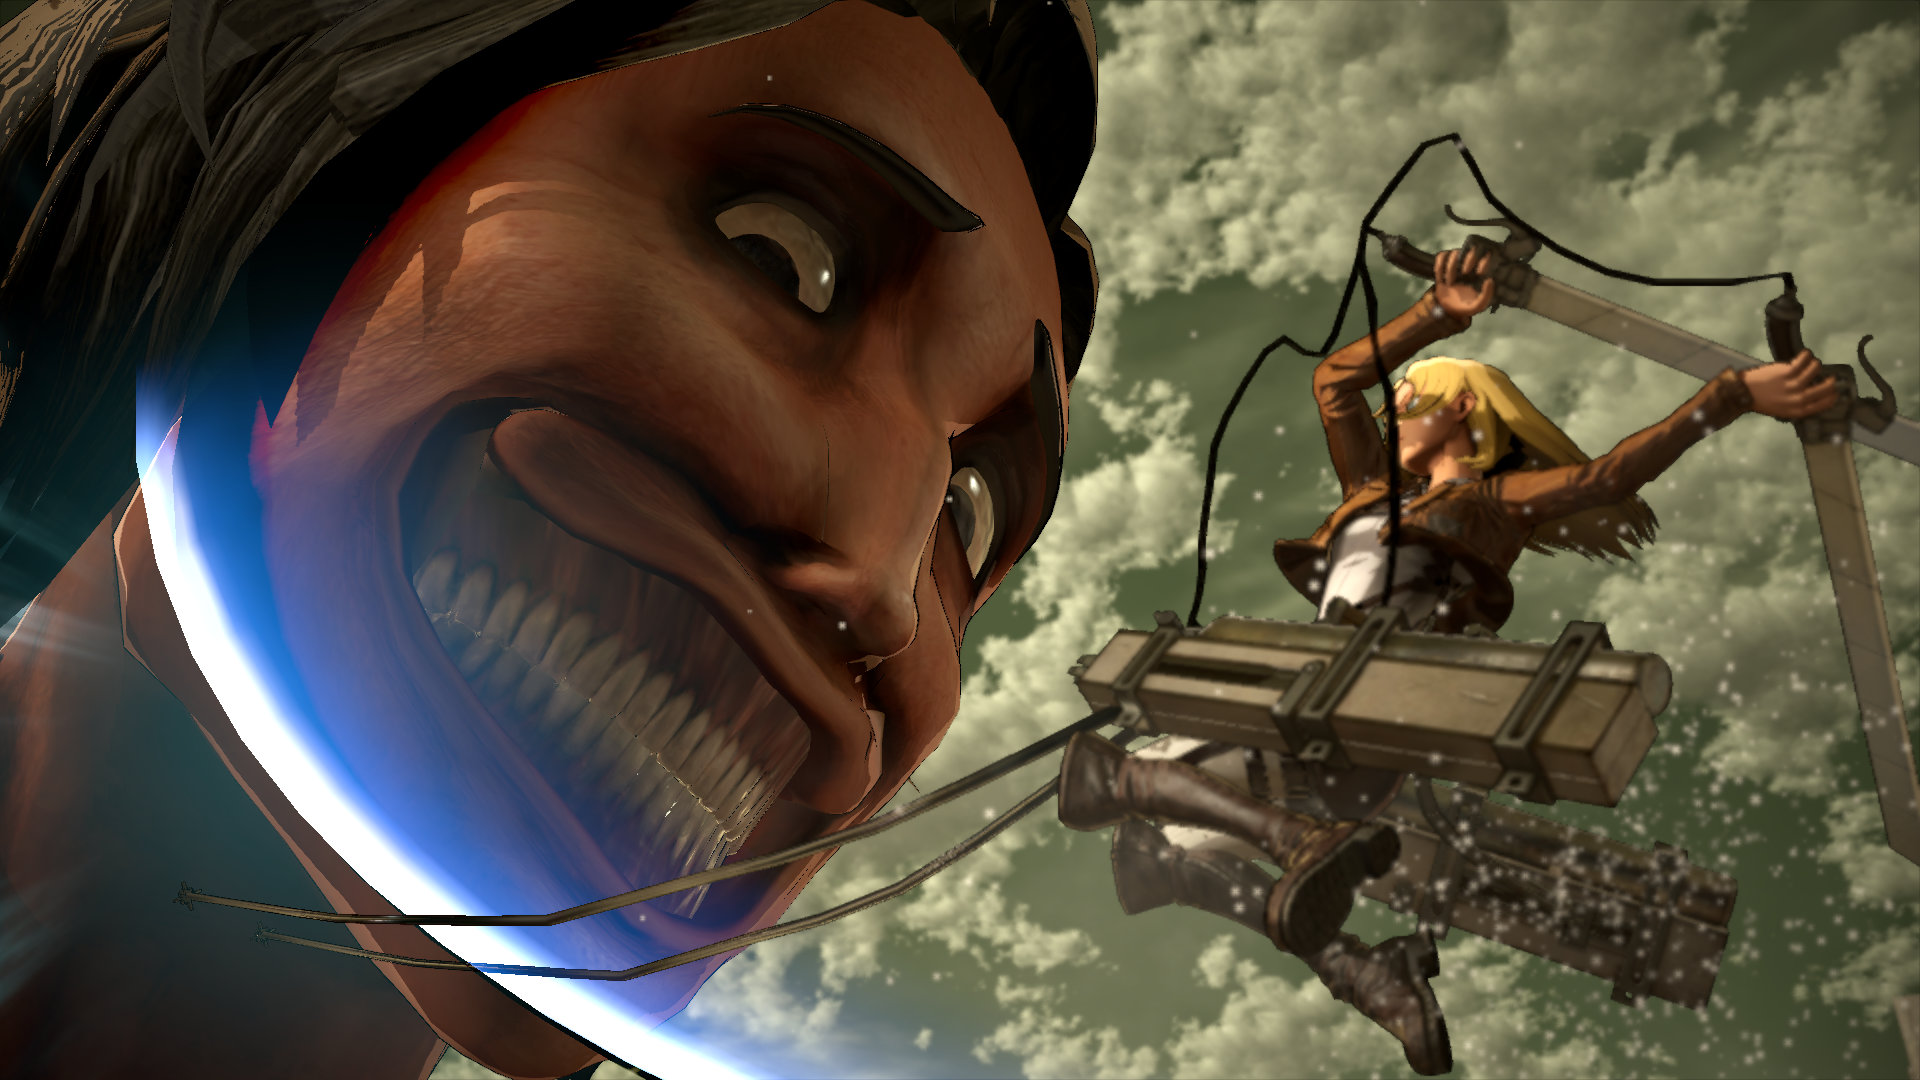 Attack on Titan - Episode 1 Featured Screenshot #1